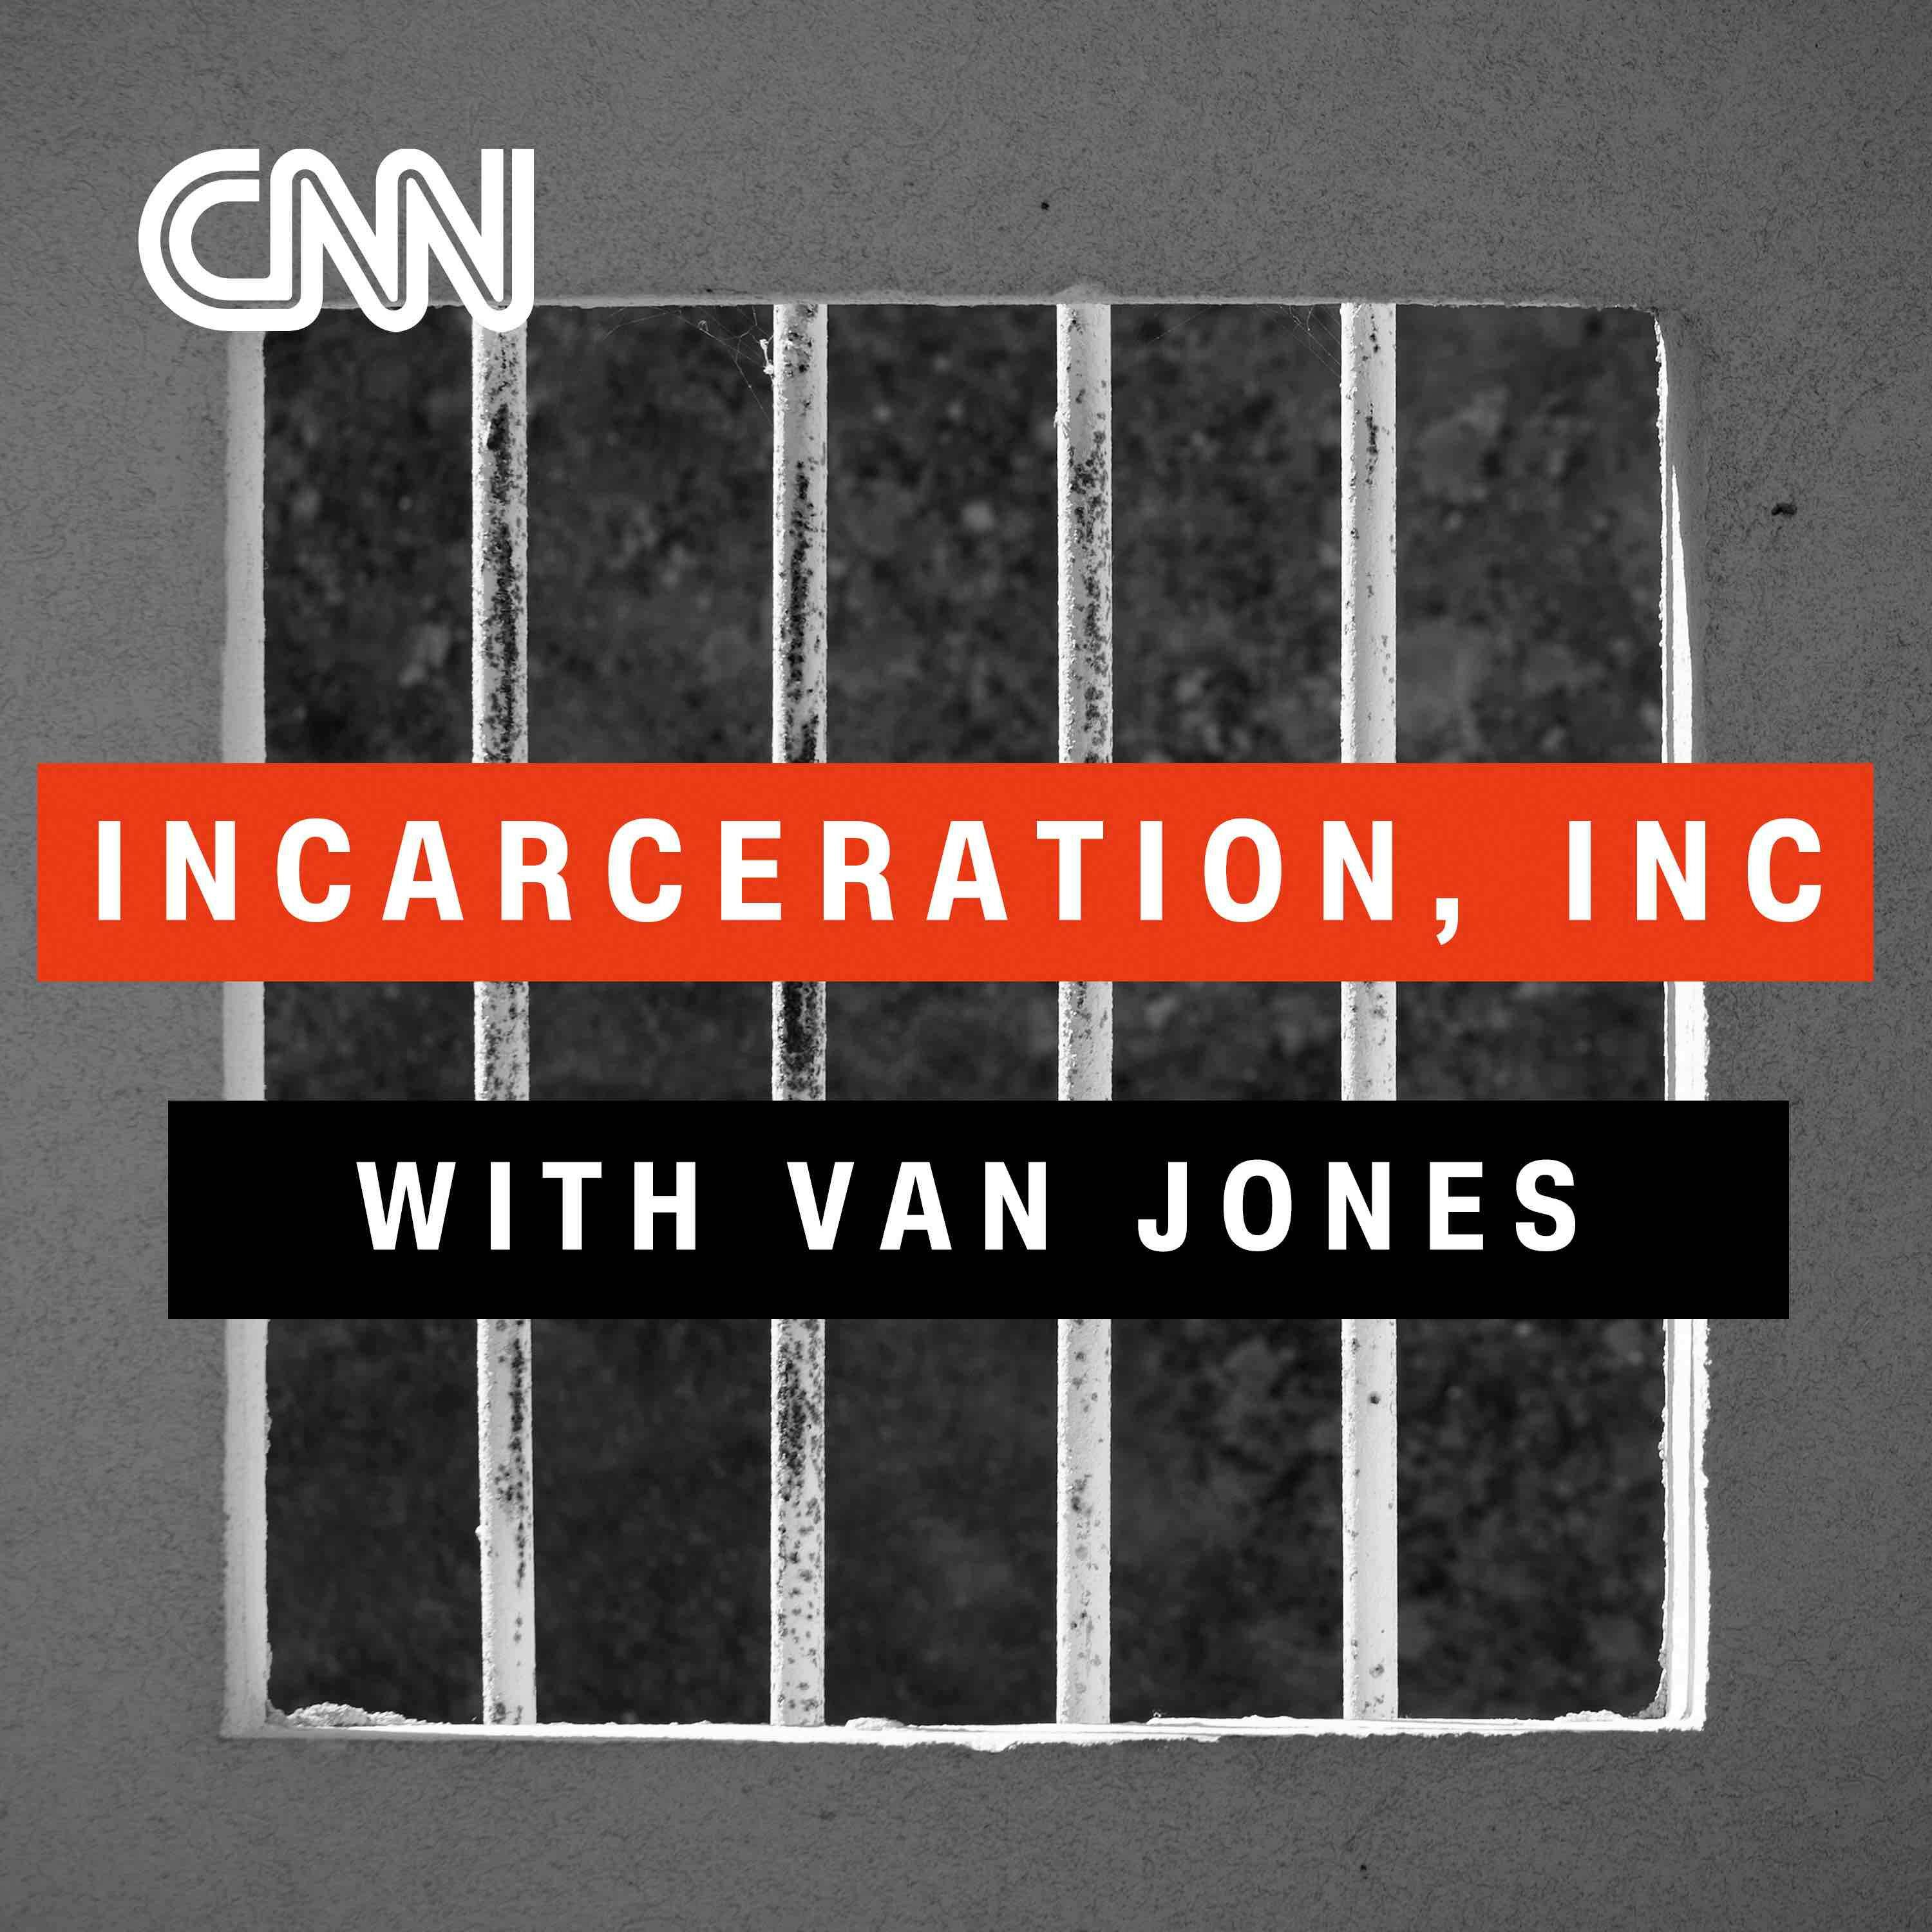 Introducing Incarceration, Inc. with Van Jones